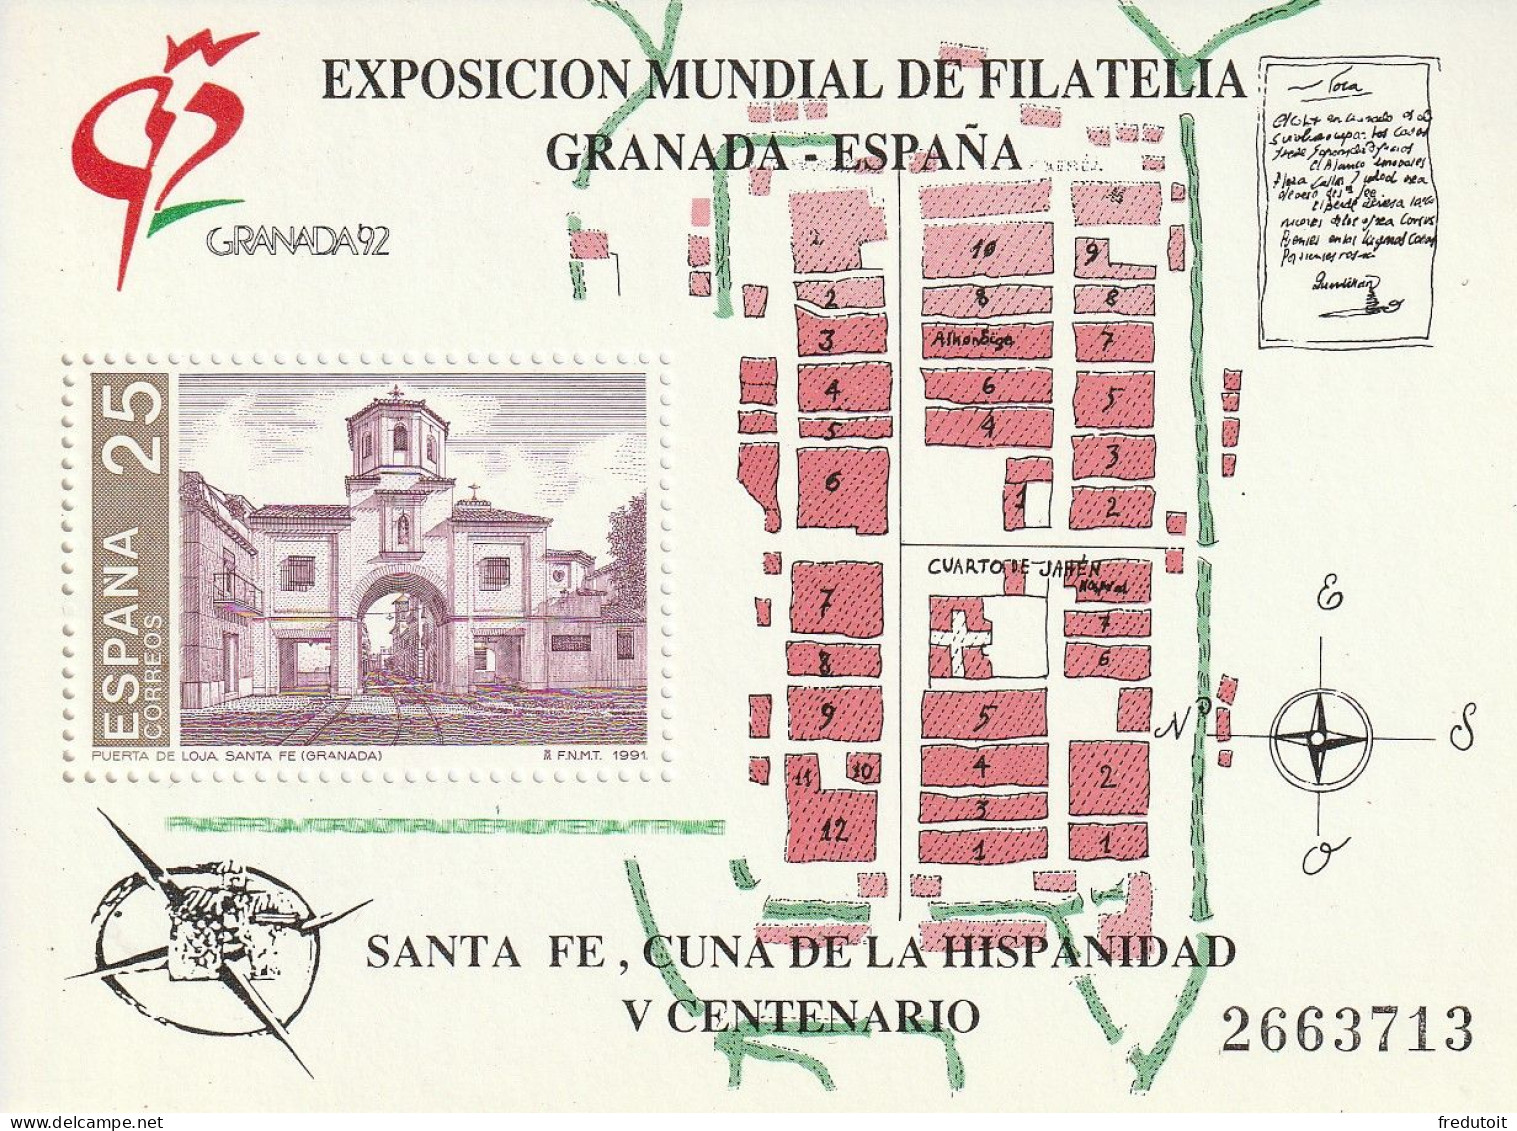 ESPAGNE - BLOC N°45 ** (1991) "Granada'92" - Blocks & Sheetlets & Panes